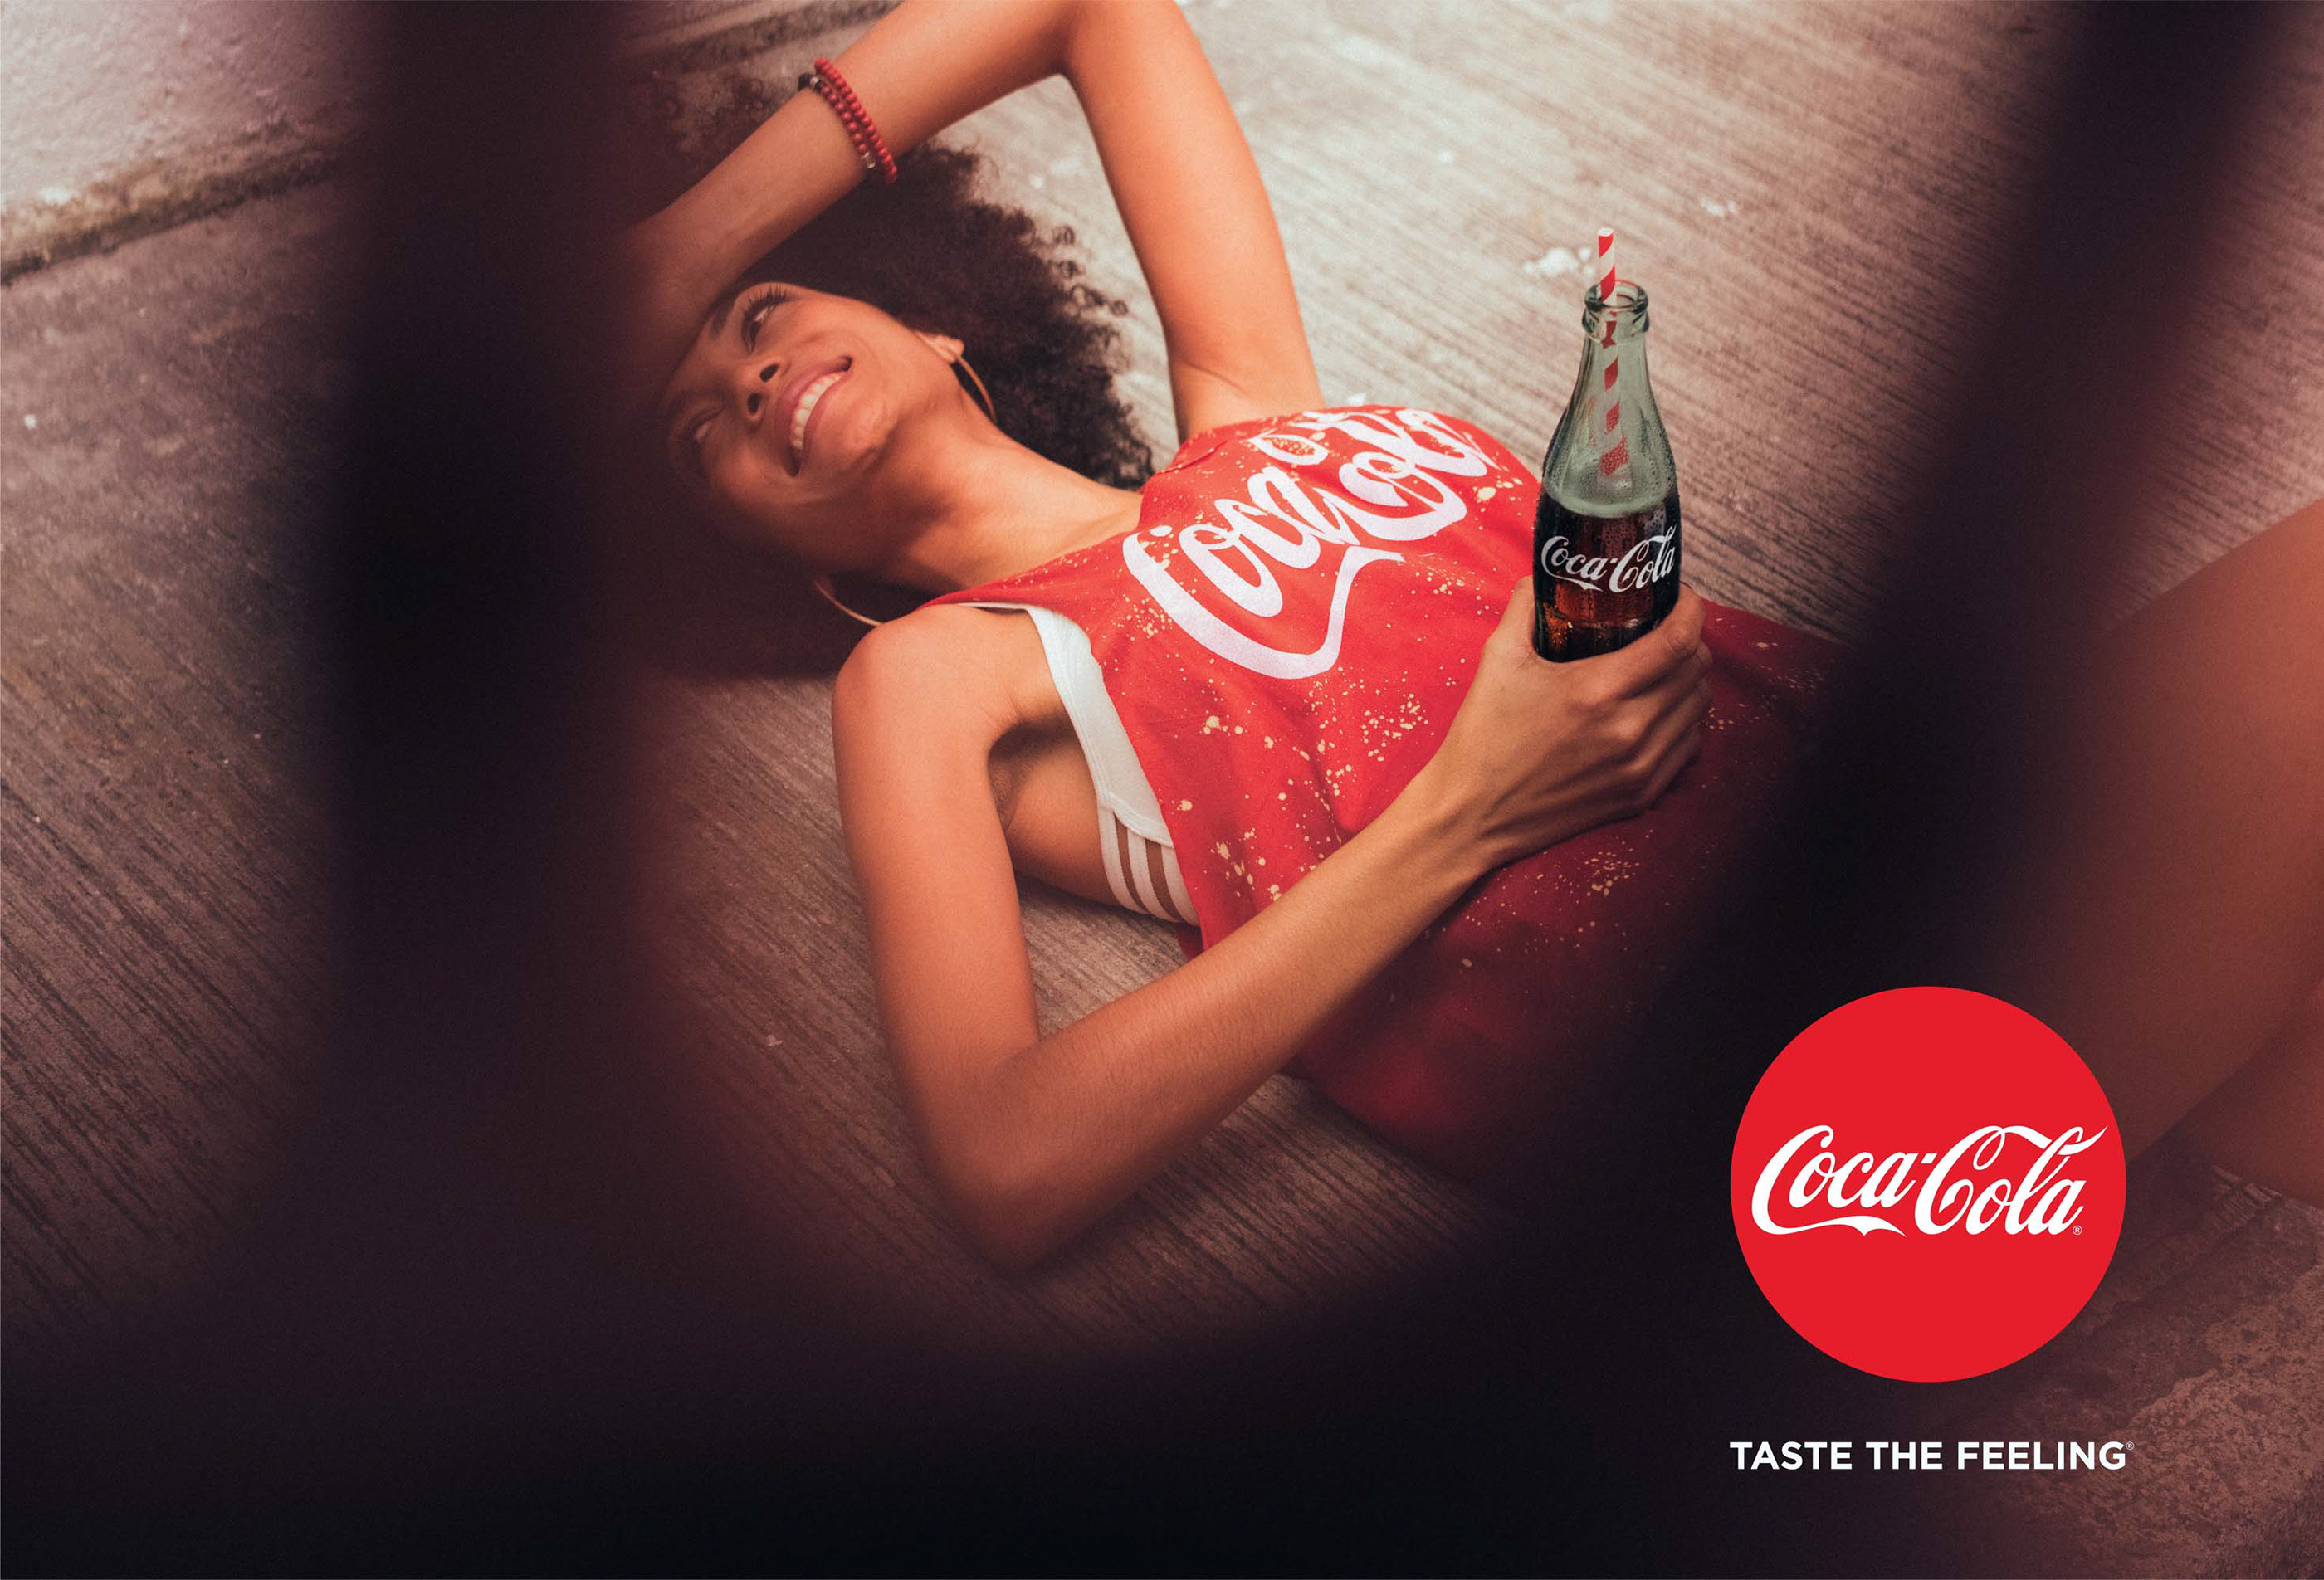 Taste the feeling. Coca Cola taste the feeling. Реклама Кока-кола 2015. Кока фото горячие. Фотосессия в стиле Кока-кола.